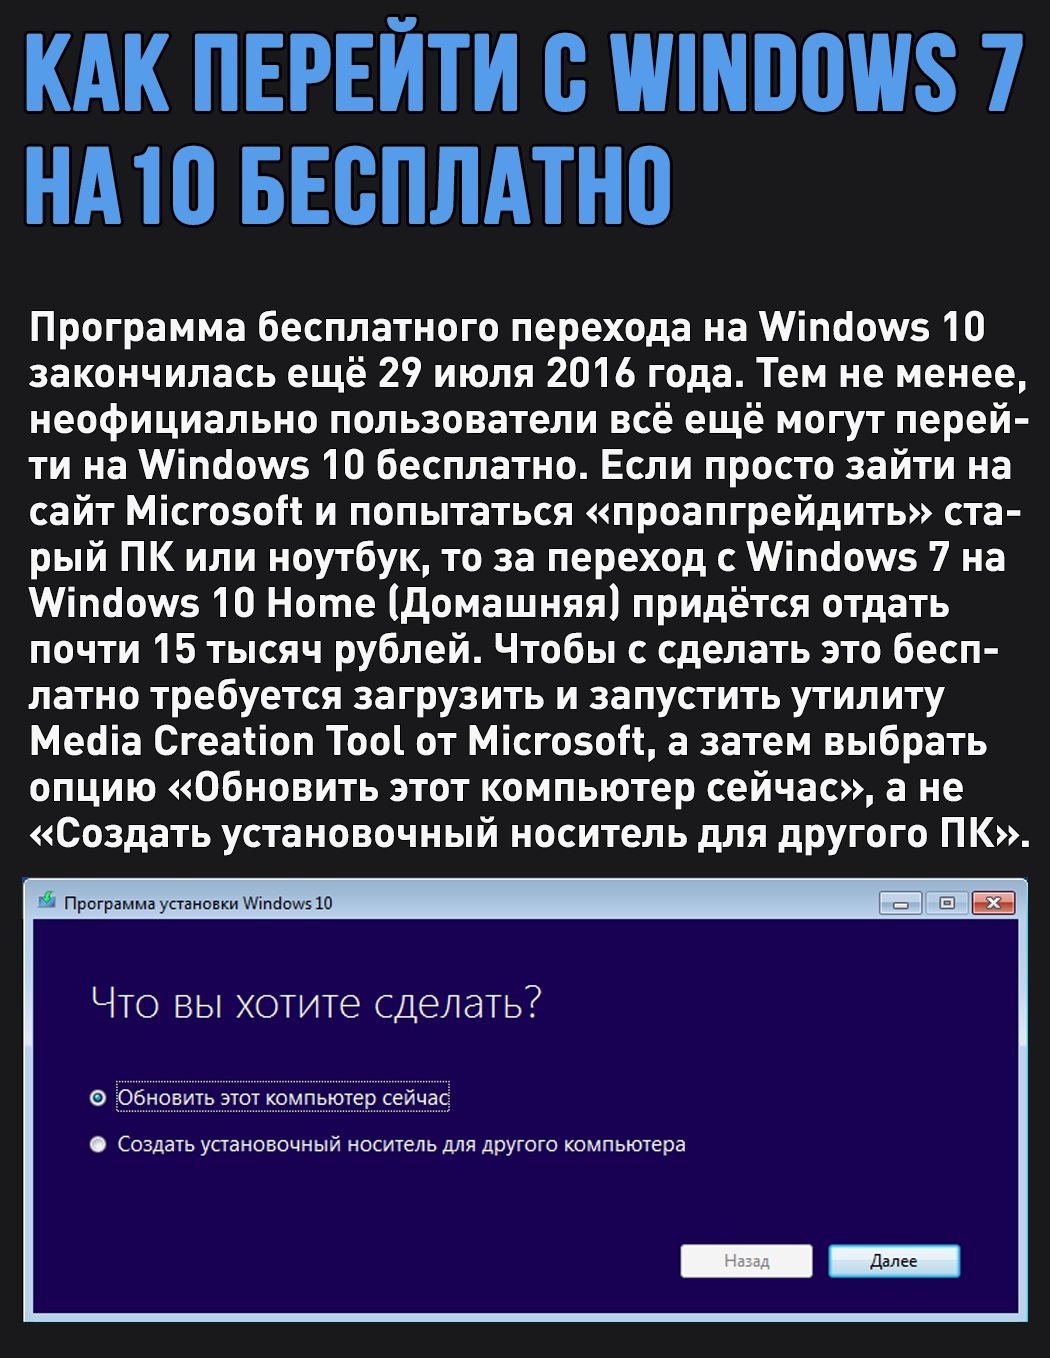 windows media creation tool for windows 7